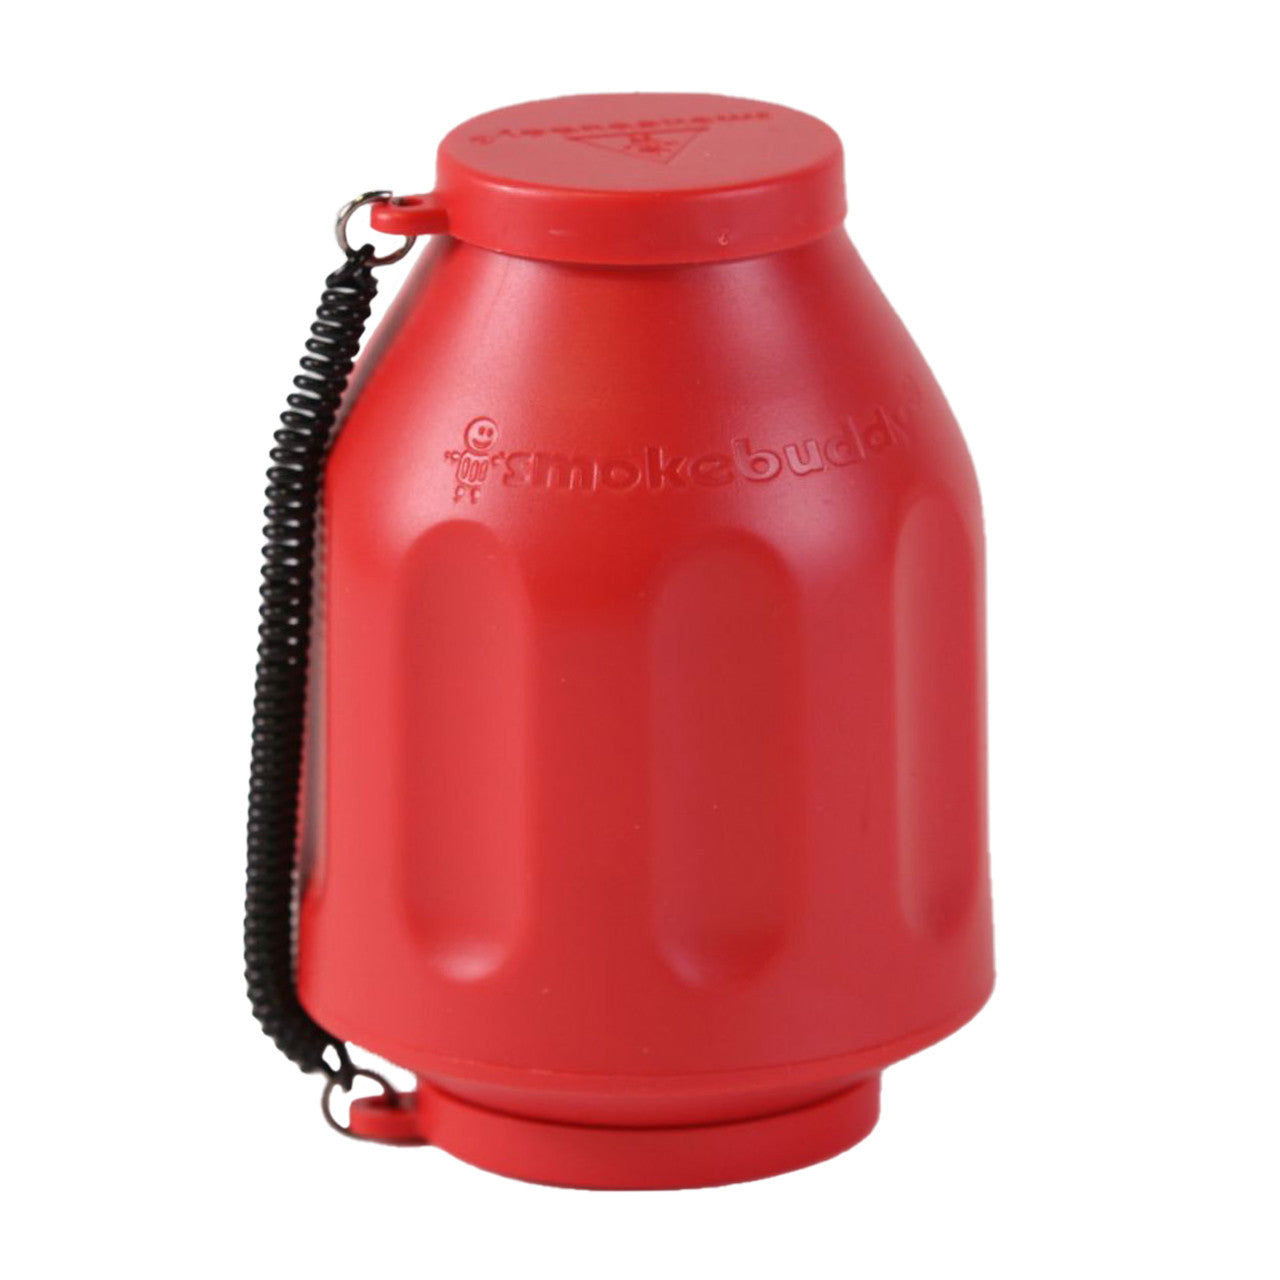 Smokebuddy G-24 Grenade • Personal Air Filter